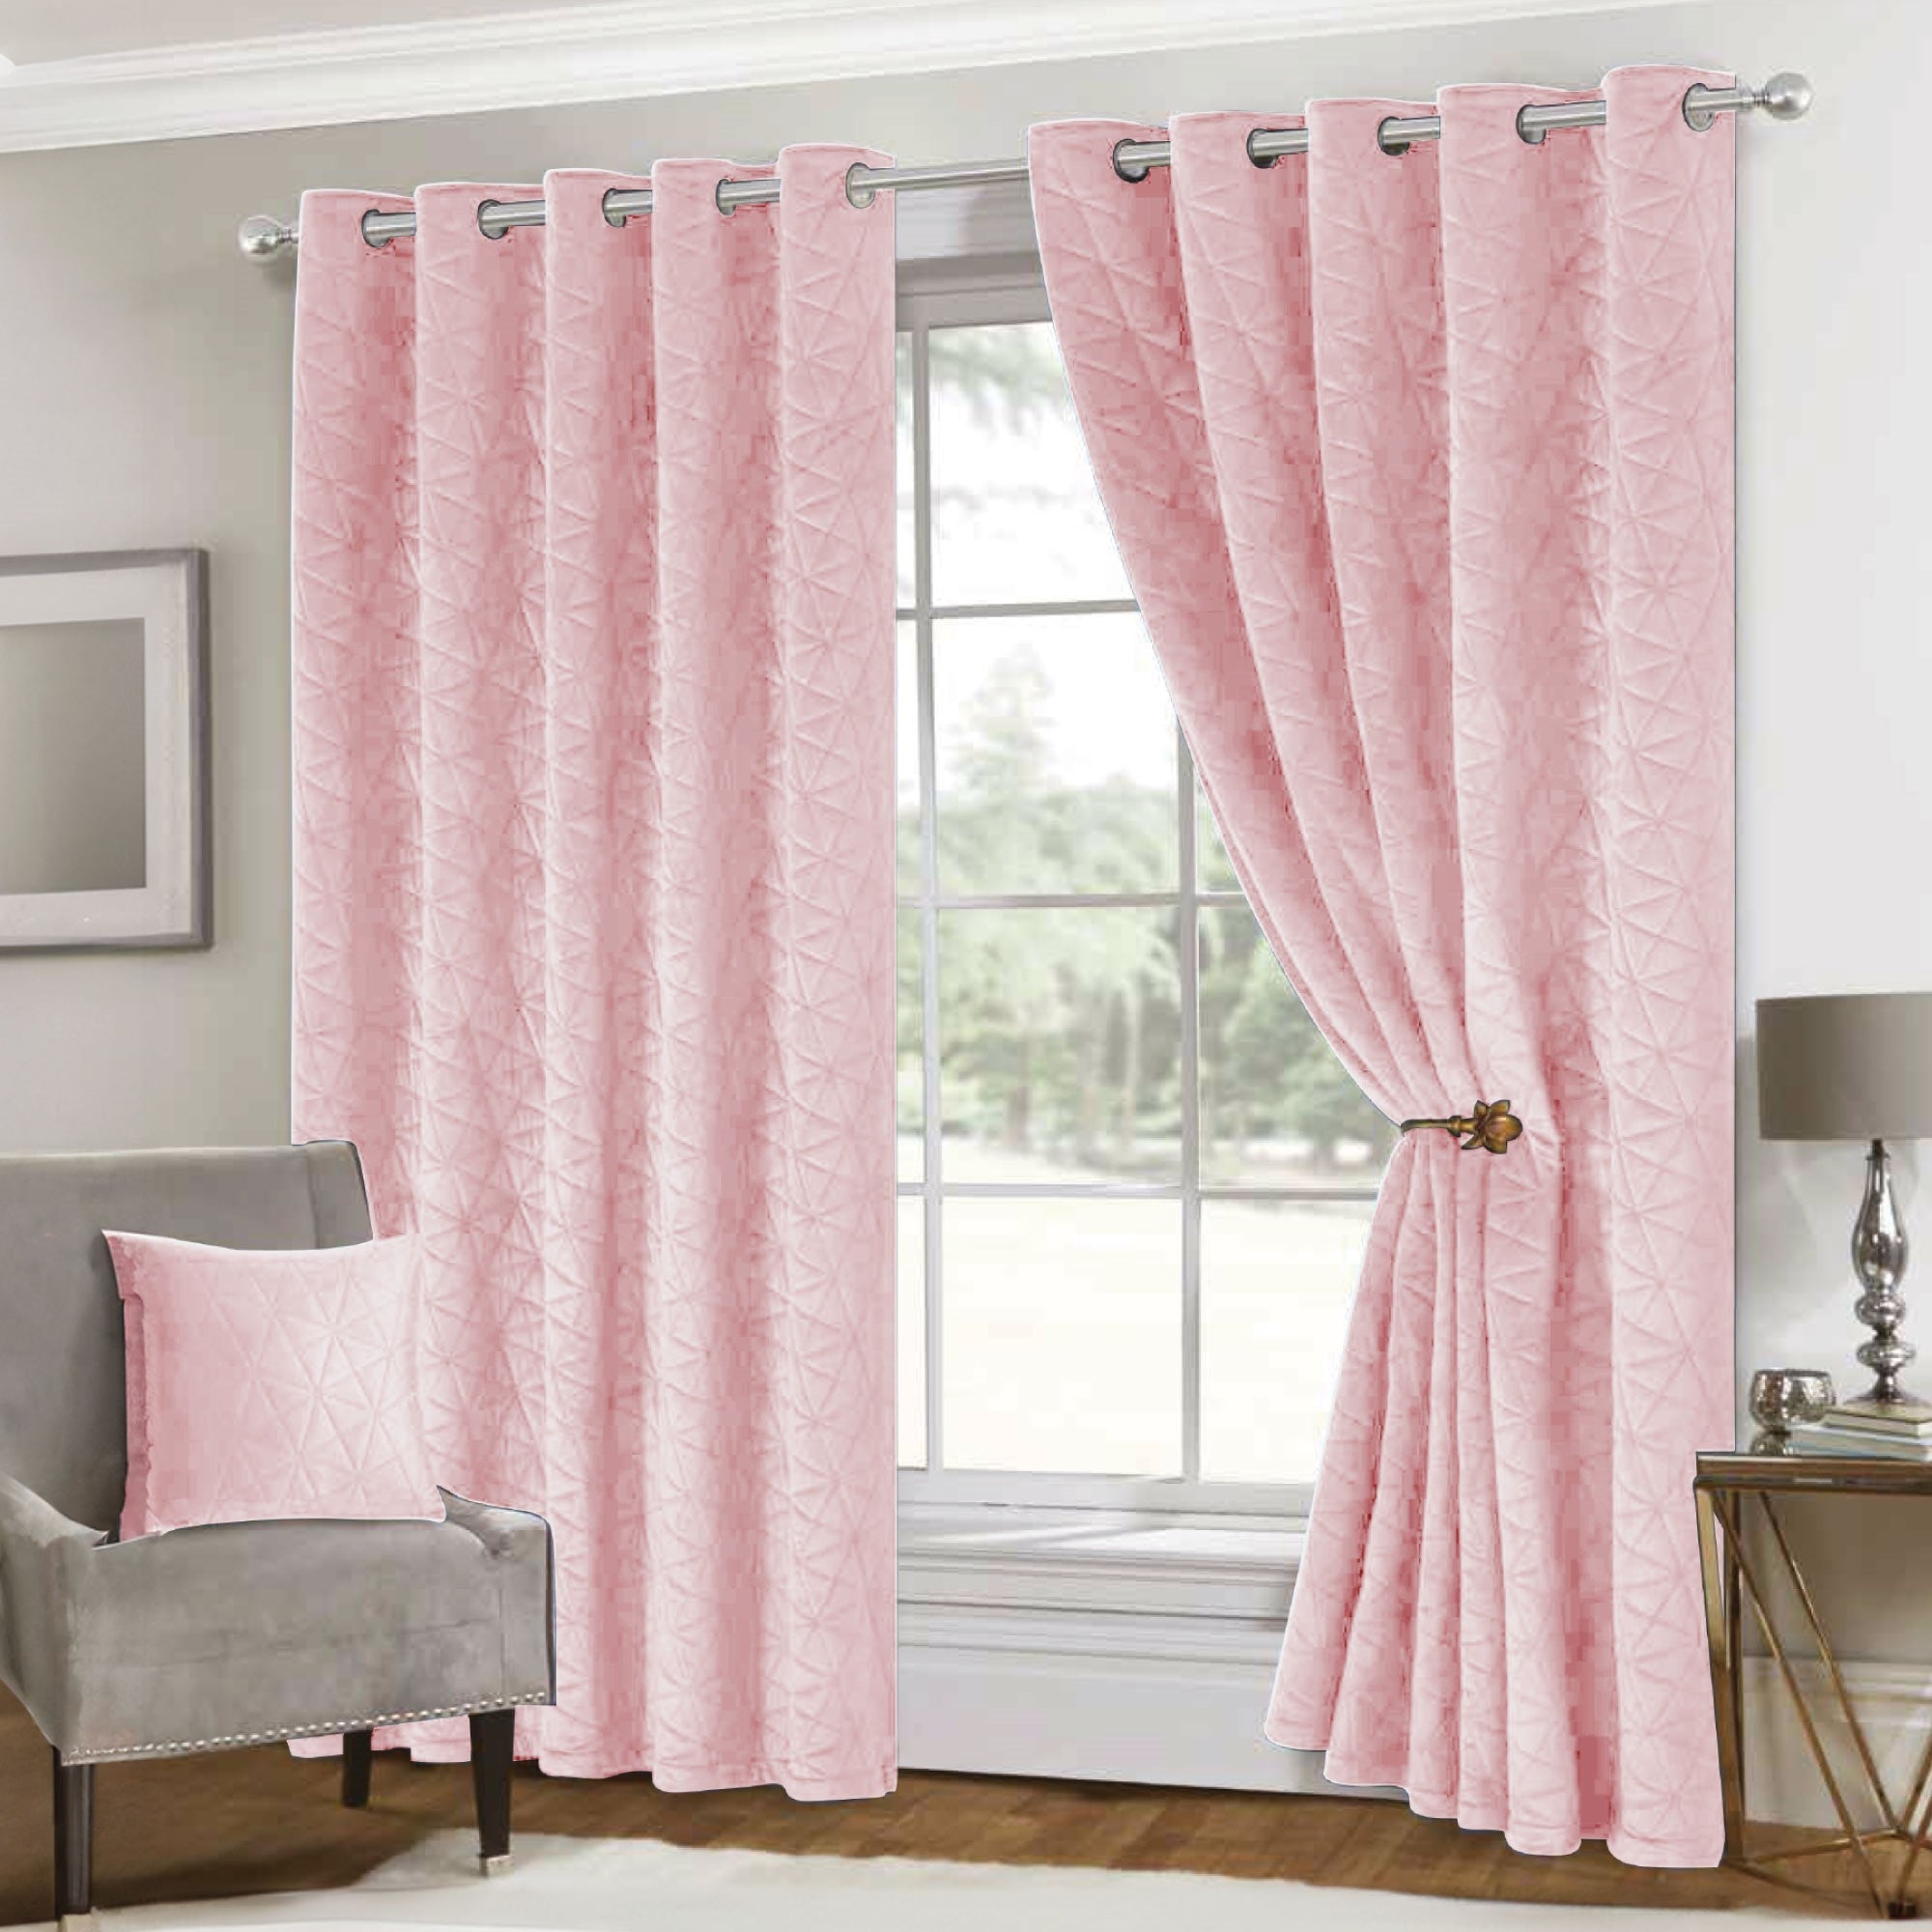 Lewis's Pinsonic Velvet Eyelet Curtains - Pink - 90x90